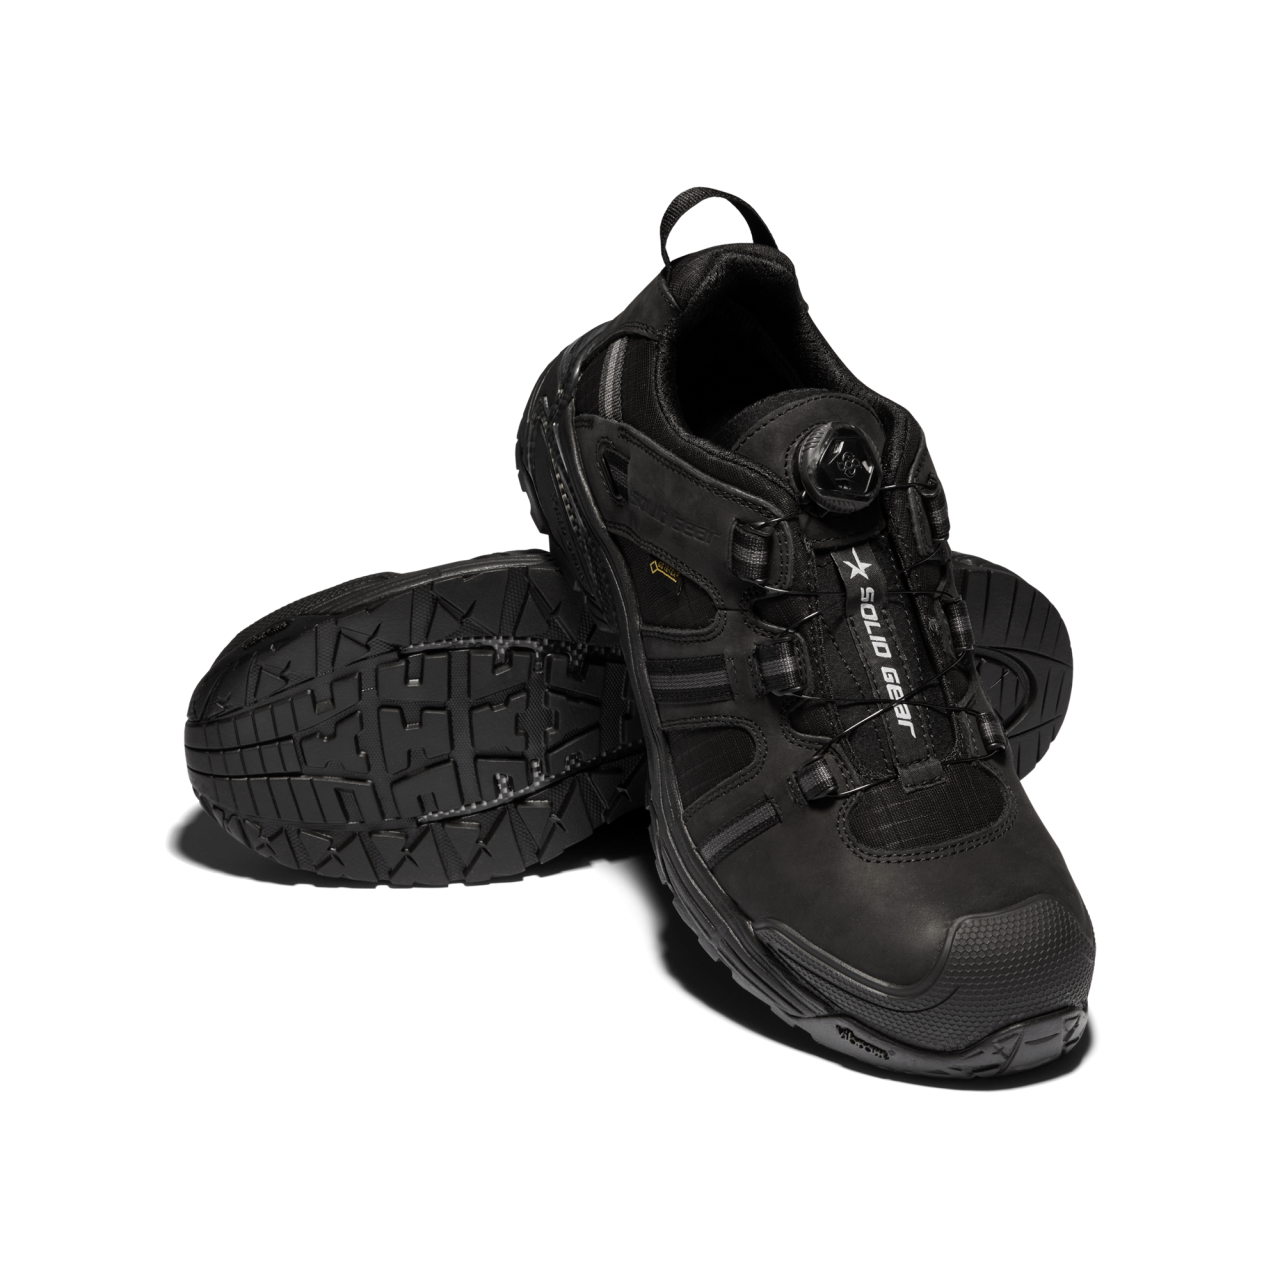 Zapato de seguridad S3 Enforcer GTX talla 39